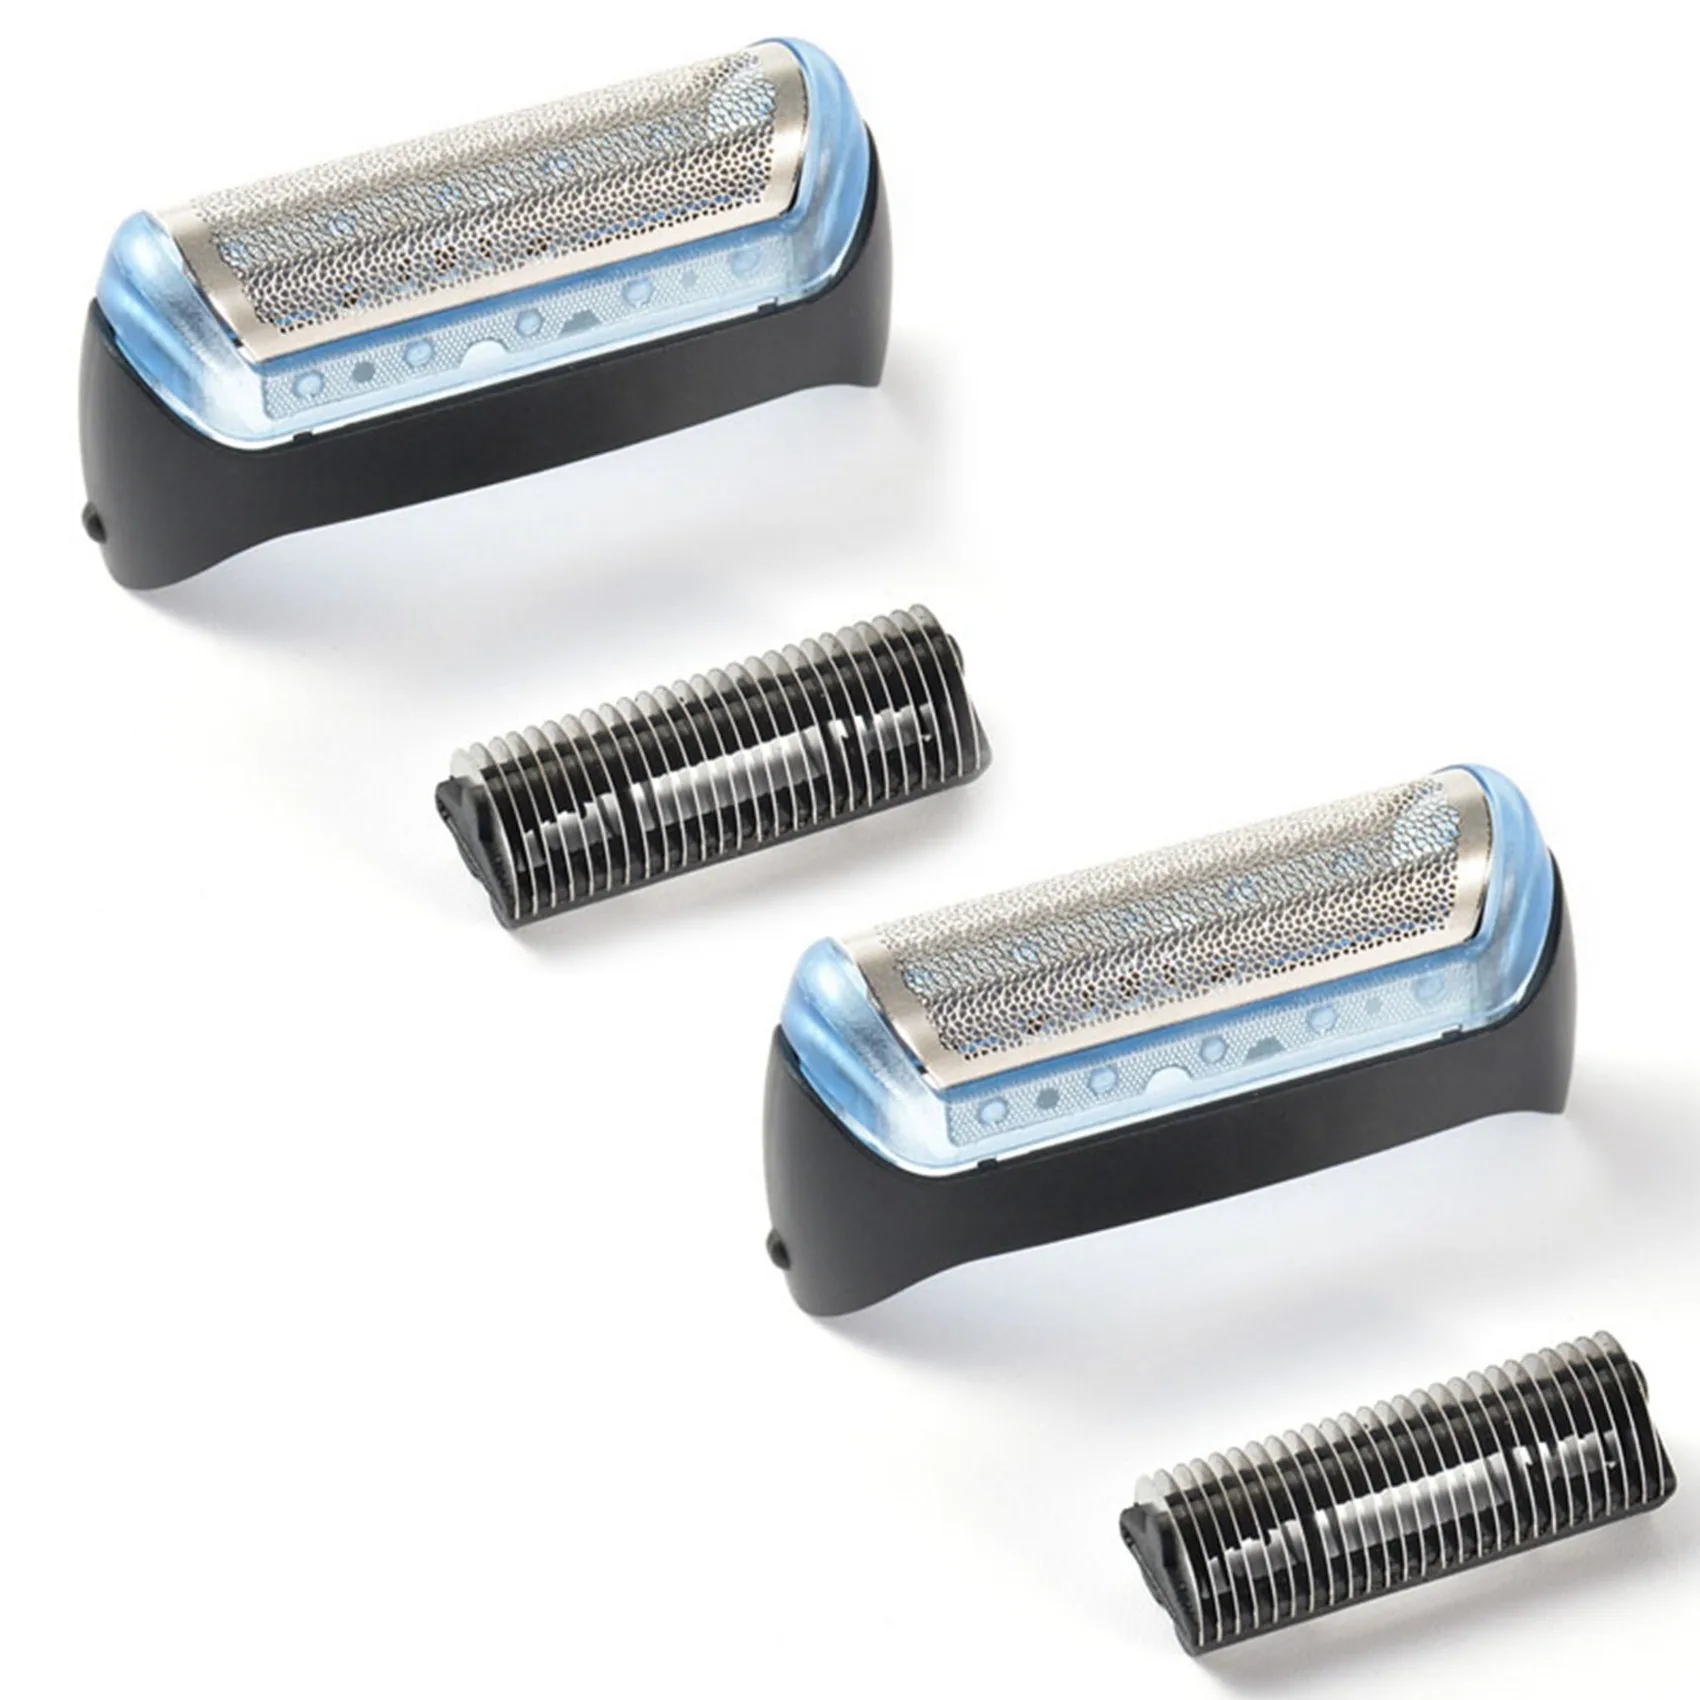 

2 Pcs Electric Mesh Durable Shaver Foil Head Parts for Braun 10B/20B Model 180 190 170 1775 1735